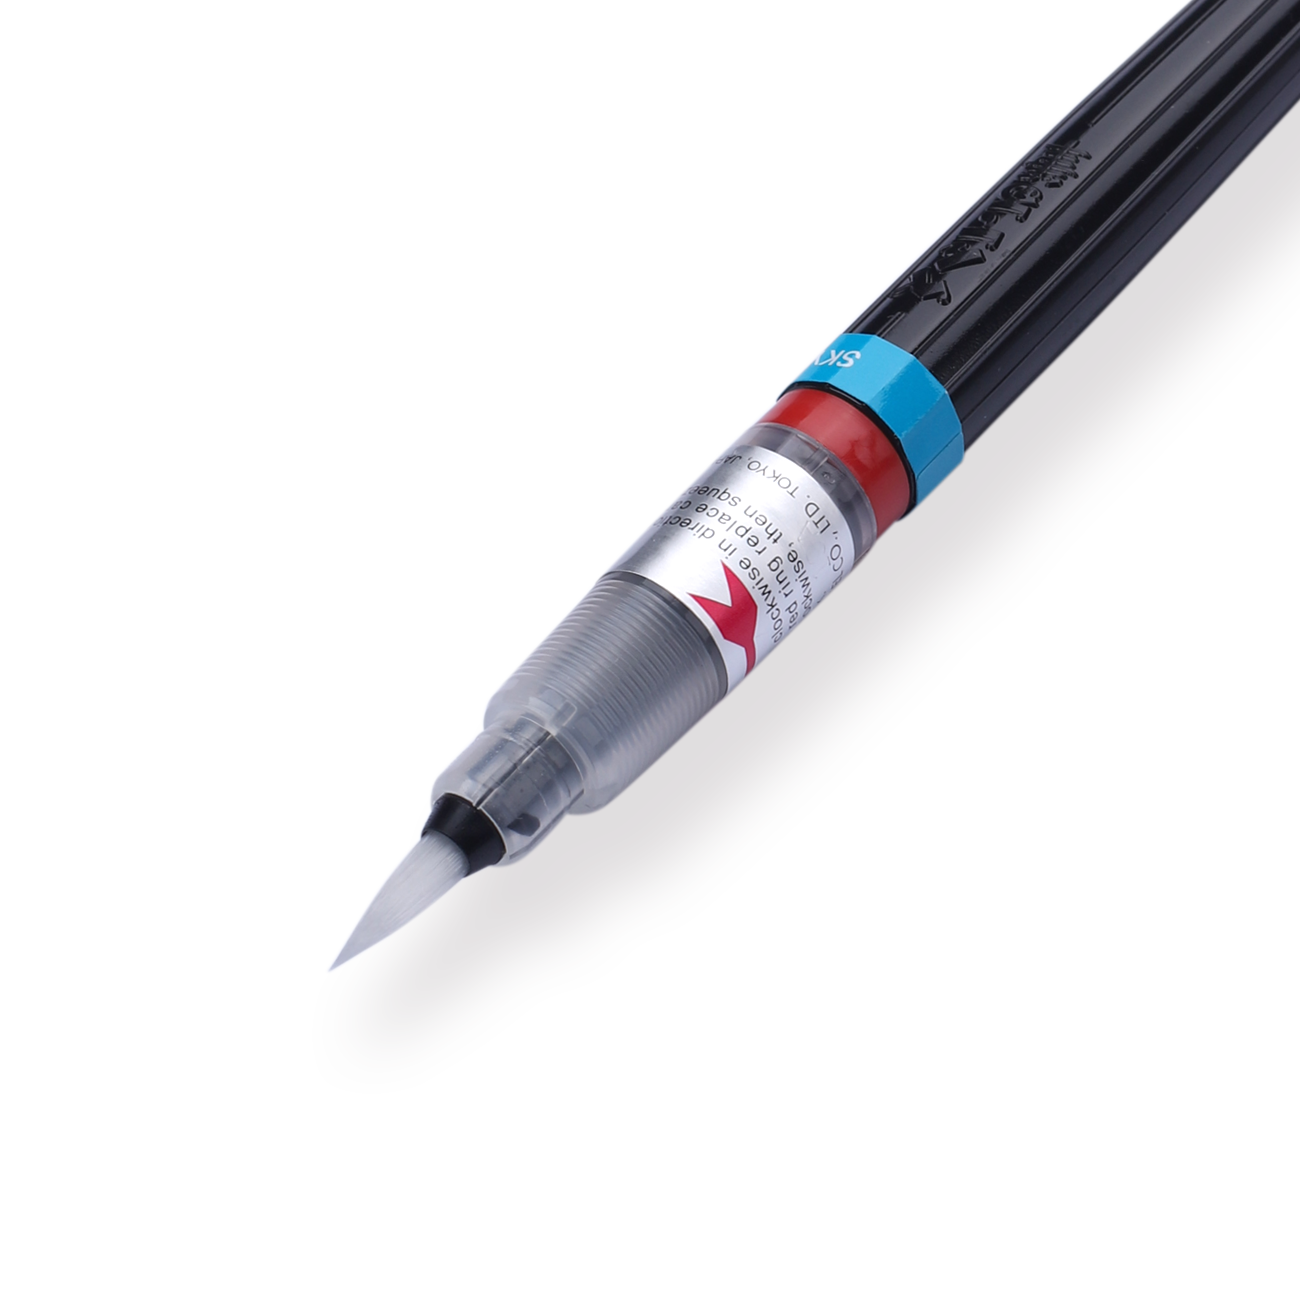 Pentel Arts Color Brush Pen - Sky Blue - Stationery Pal